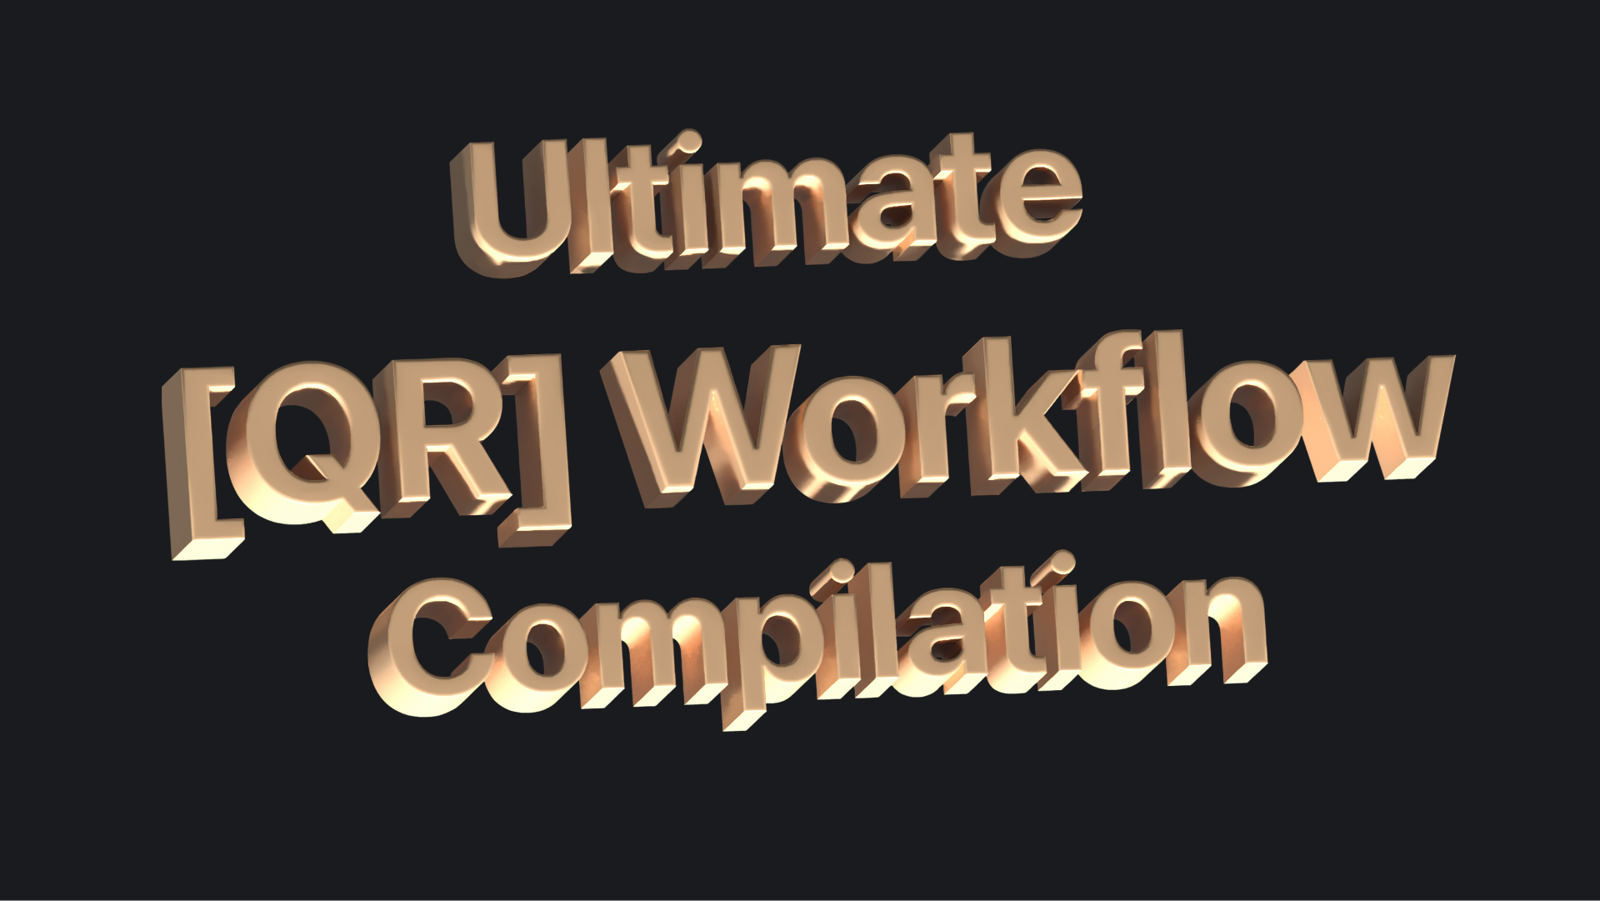 Ultimate QR Workflow Compilation